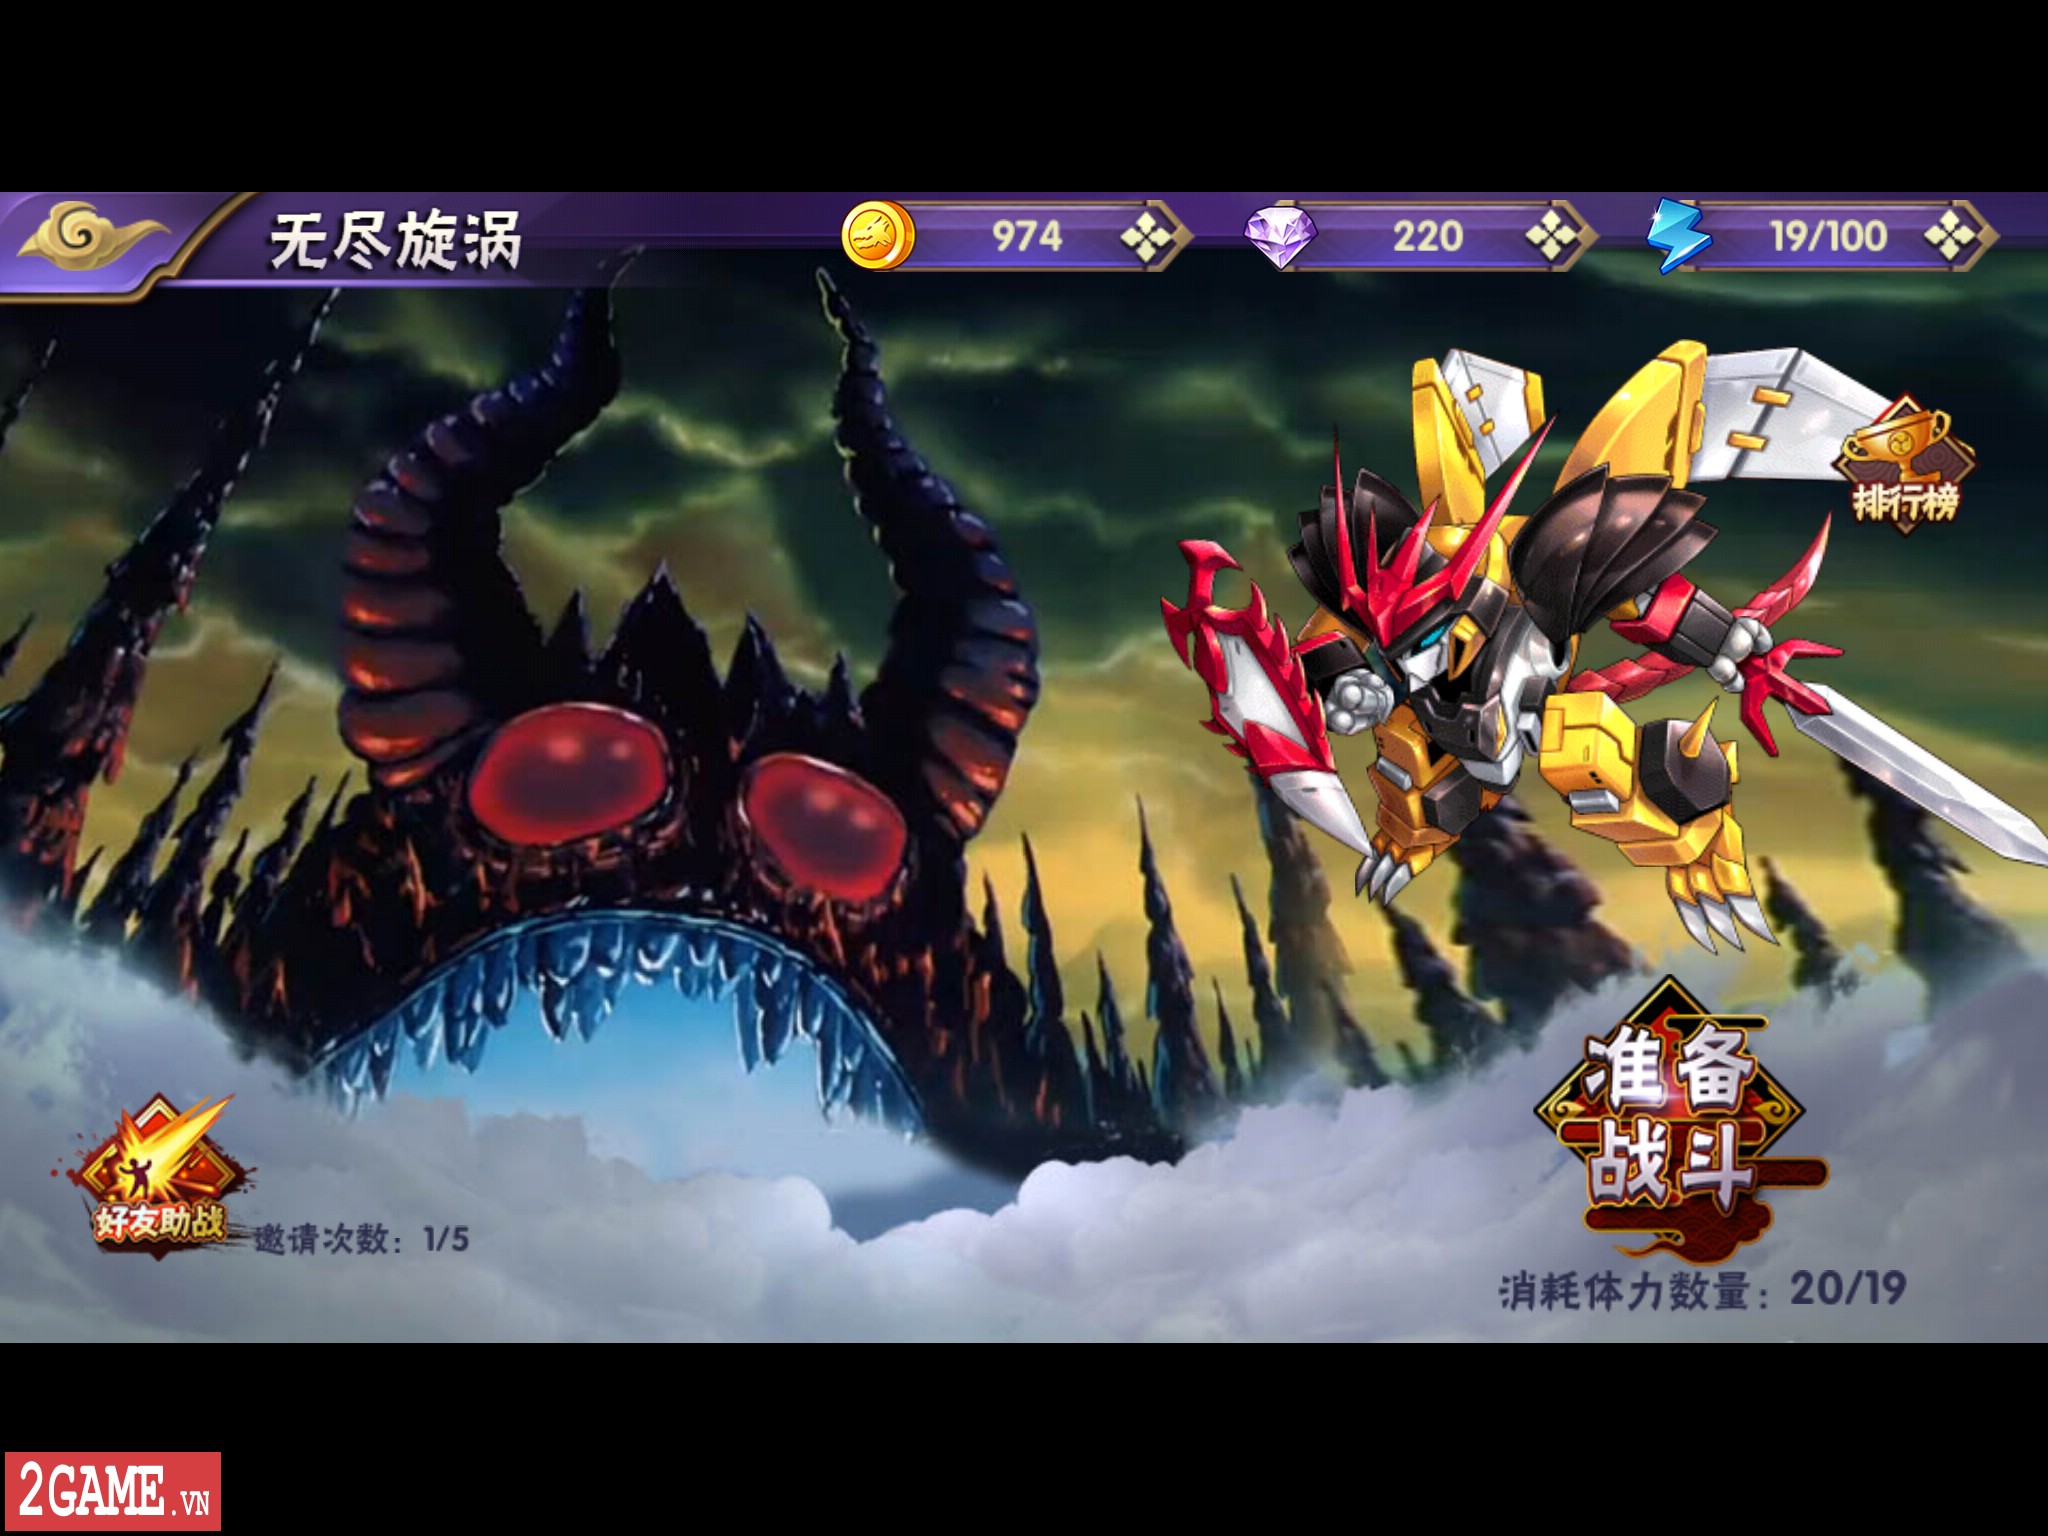 2game-Devil-God-Heroes-mobile-3s.jpg (2048×1536)